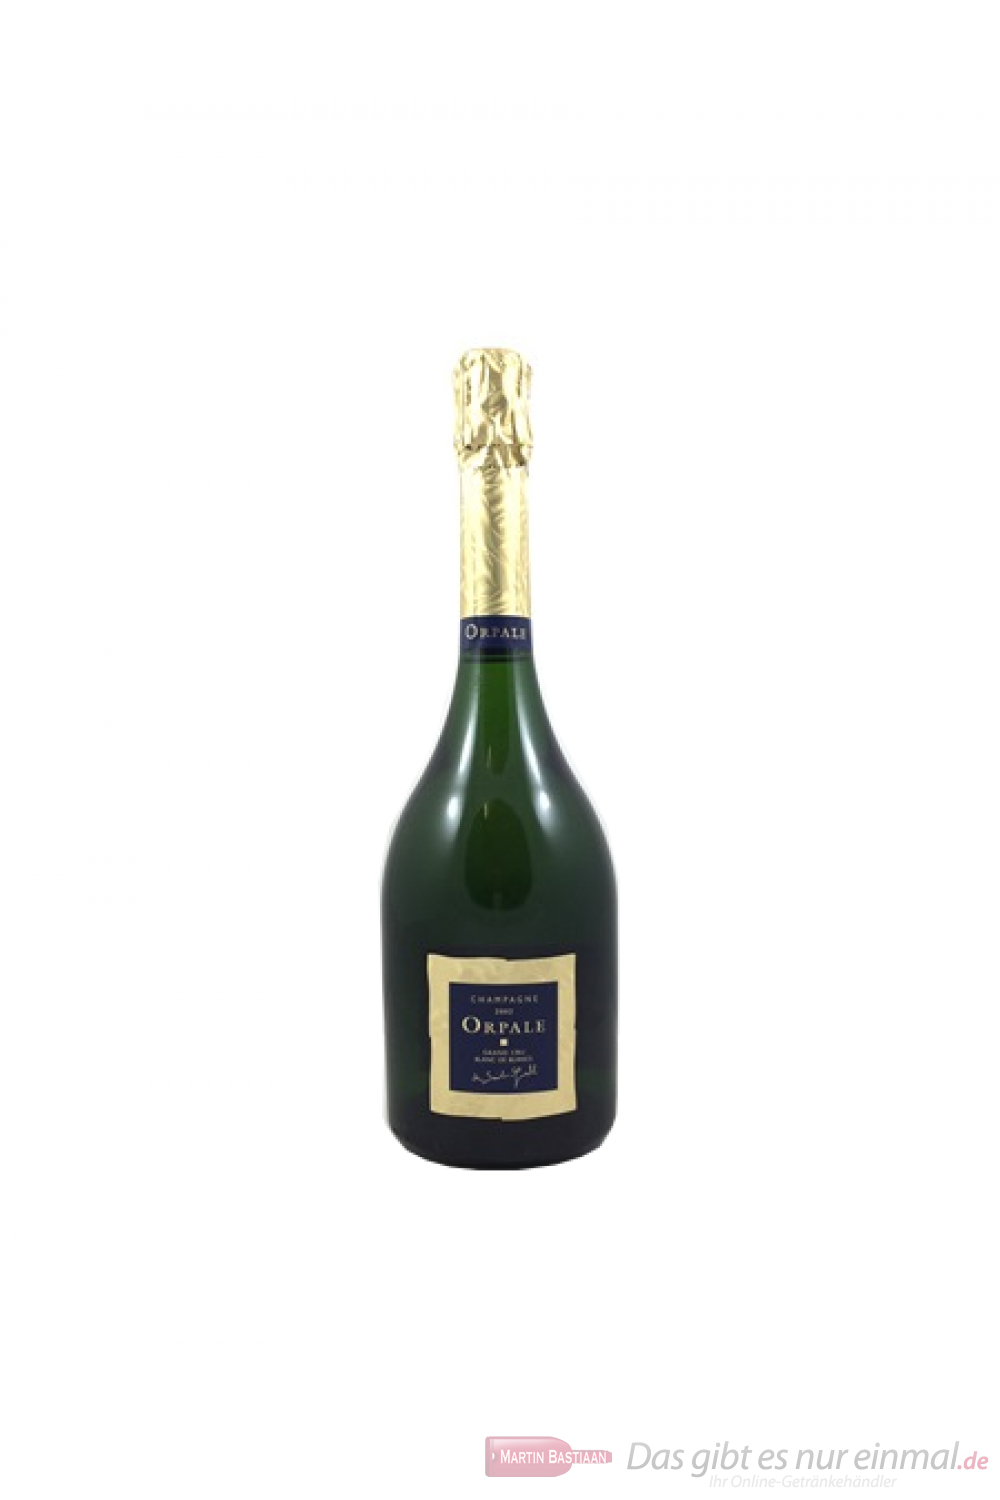 De Saint Gall Champagner Prestige Orpale